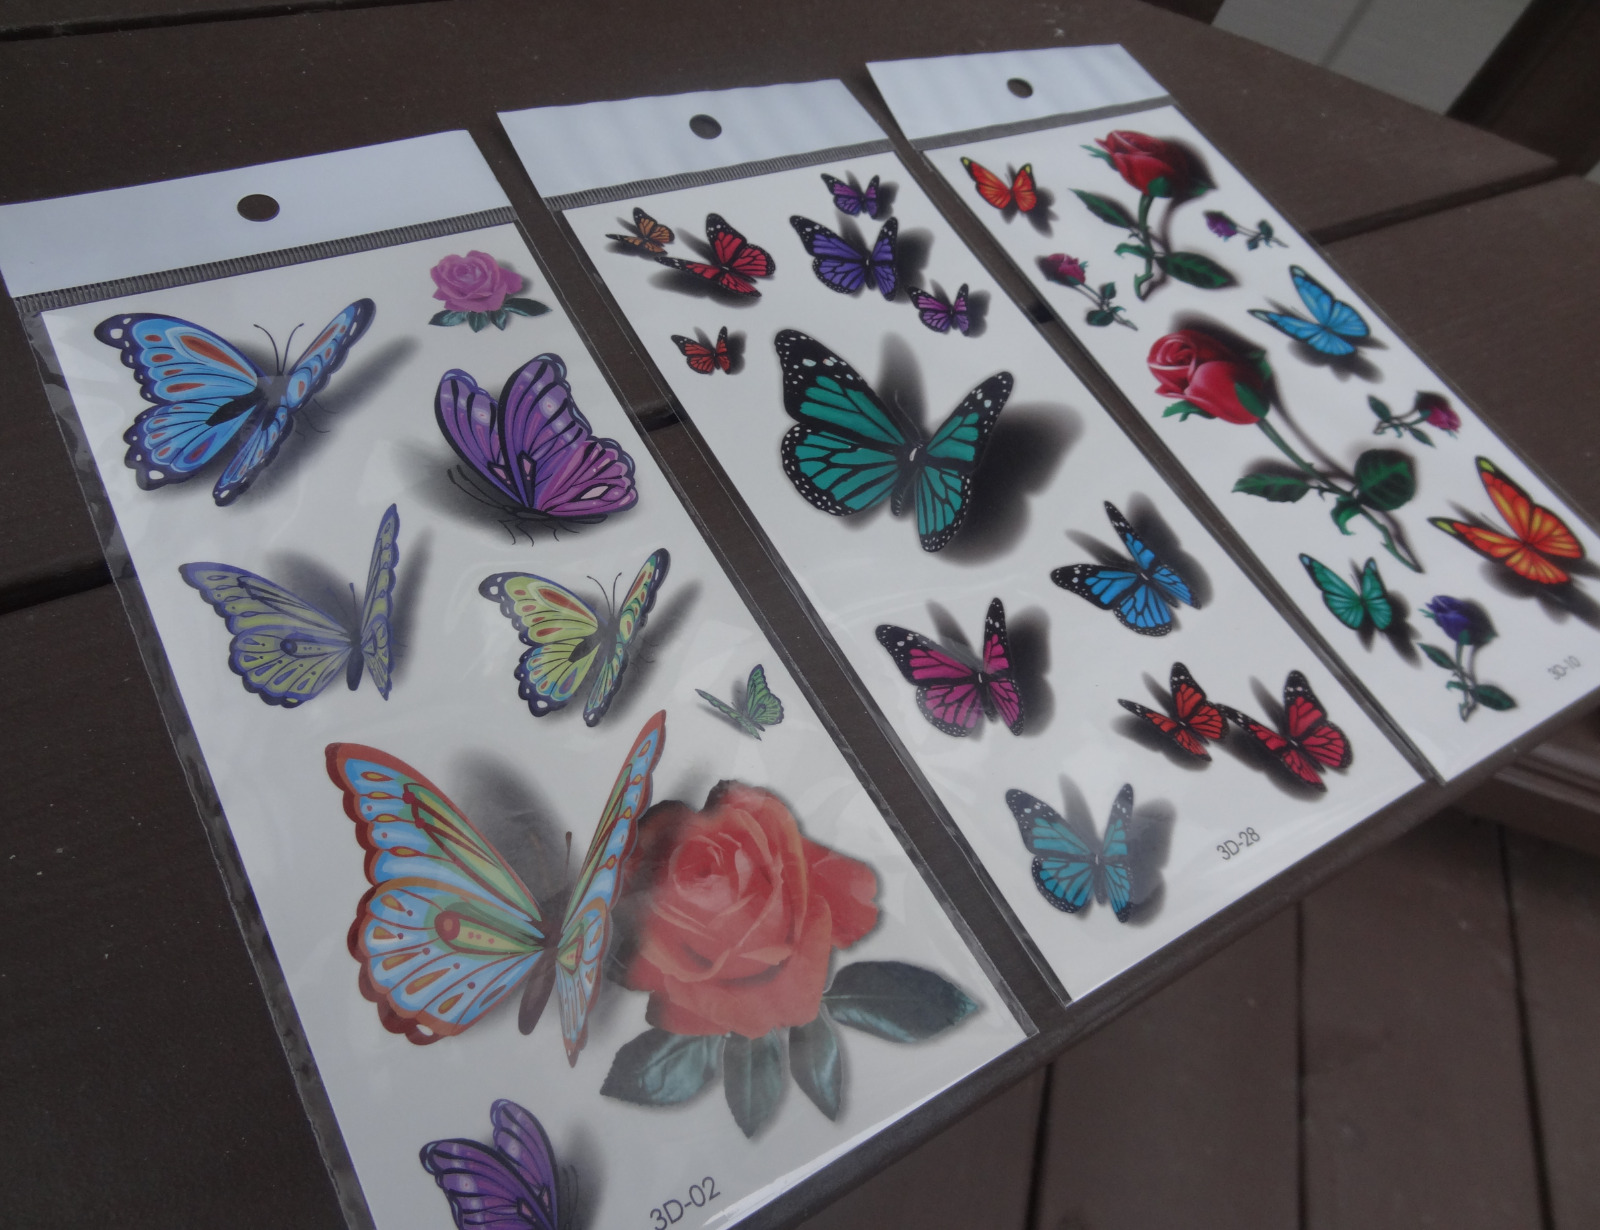 3 Sheets/Set Temporary Tattoo Stickers Waterproof 3D Butterfly Flowers Body Art